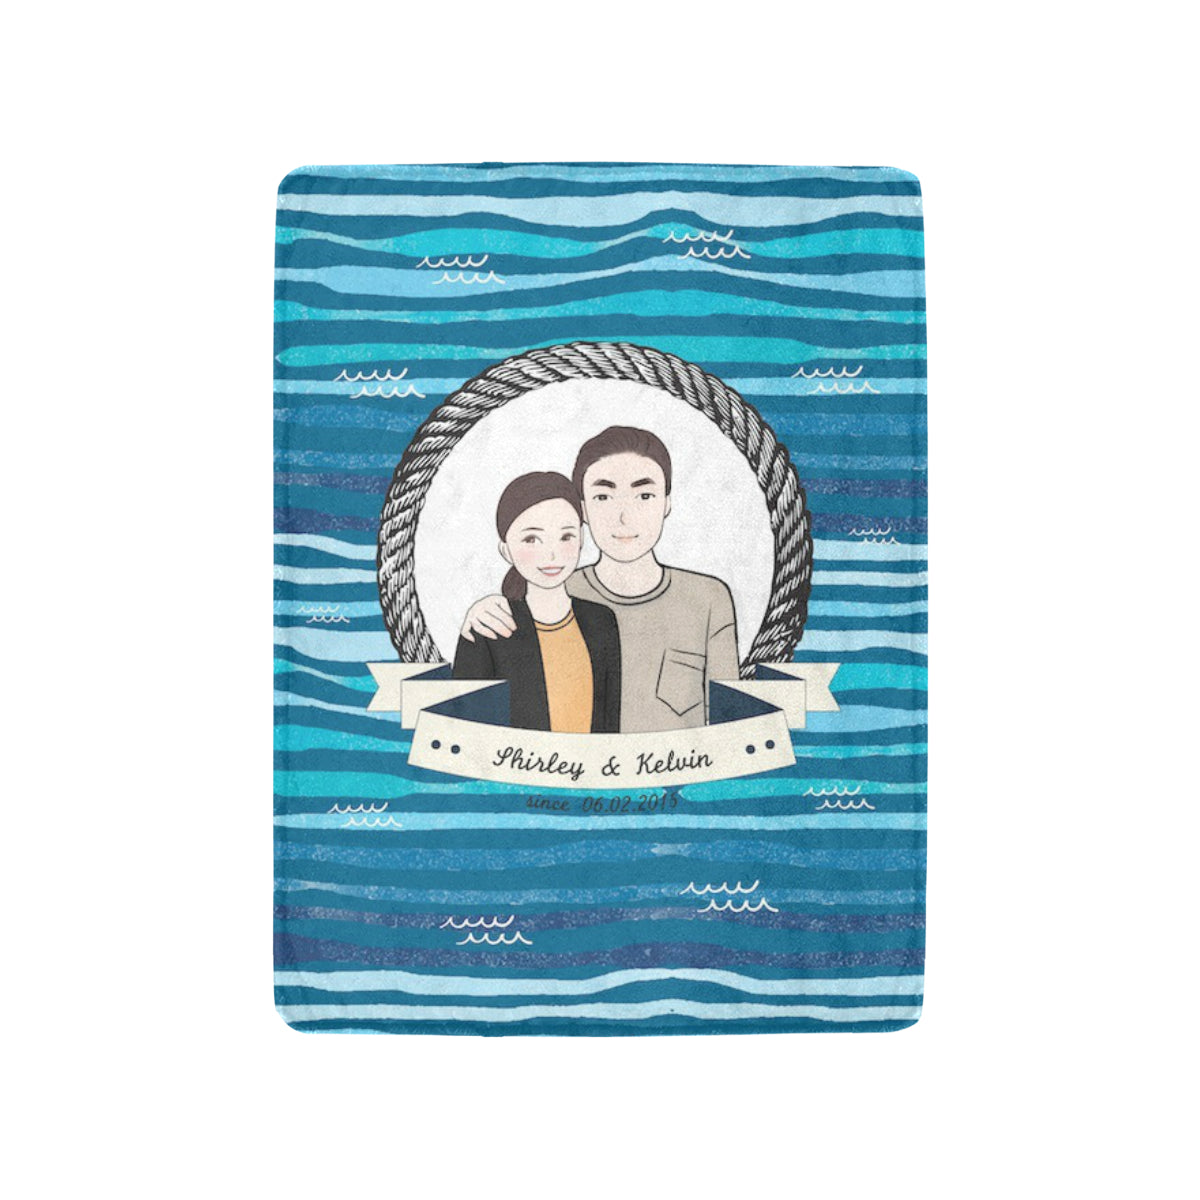 Marina Wave款式客製化插畫毛毯 Marina Wave- Custom Blanket with tailor-made illustration. - HKGIFTFORU